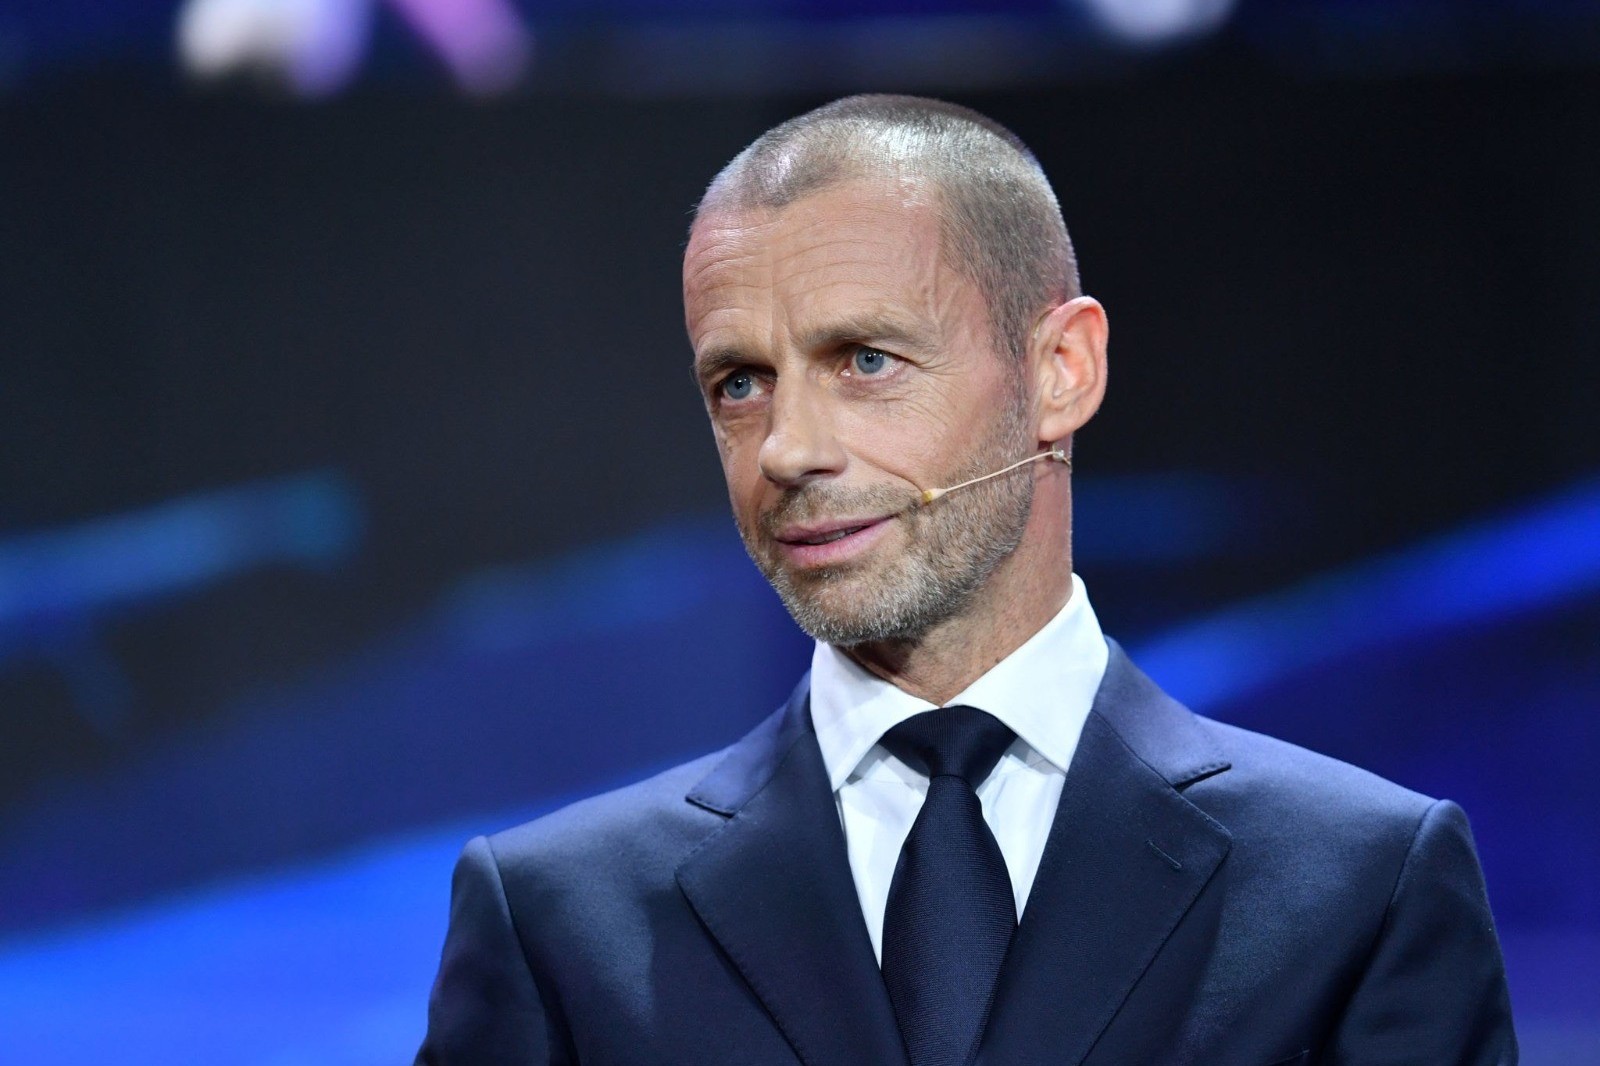 Aleksander Ceferin will not run for UEFA presidency in 2027